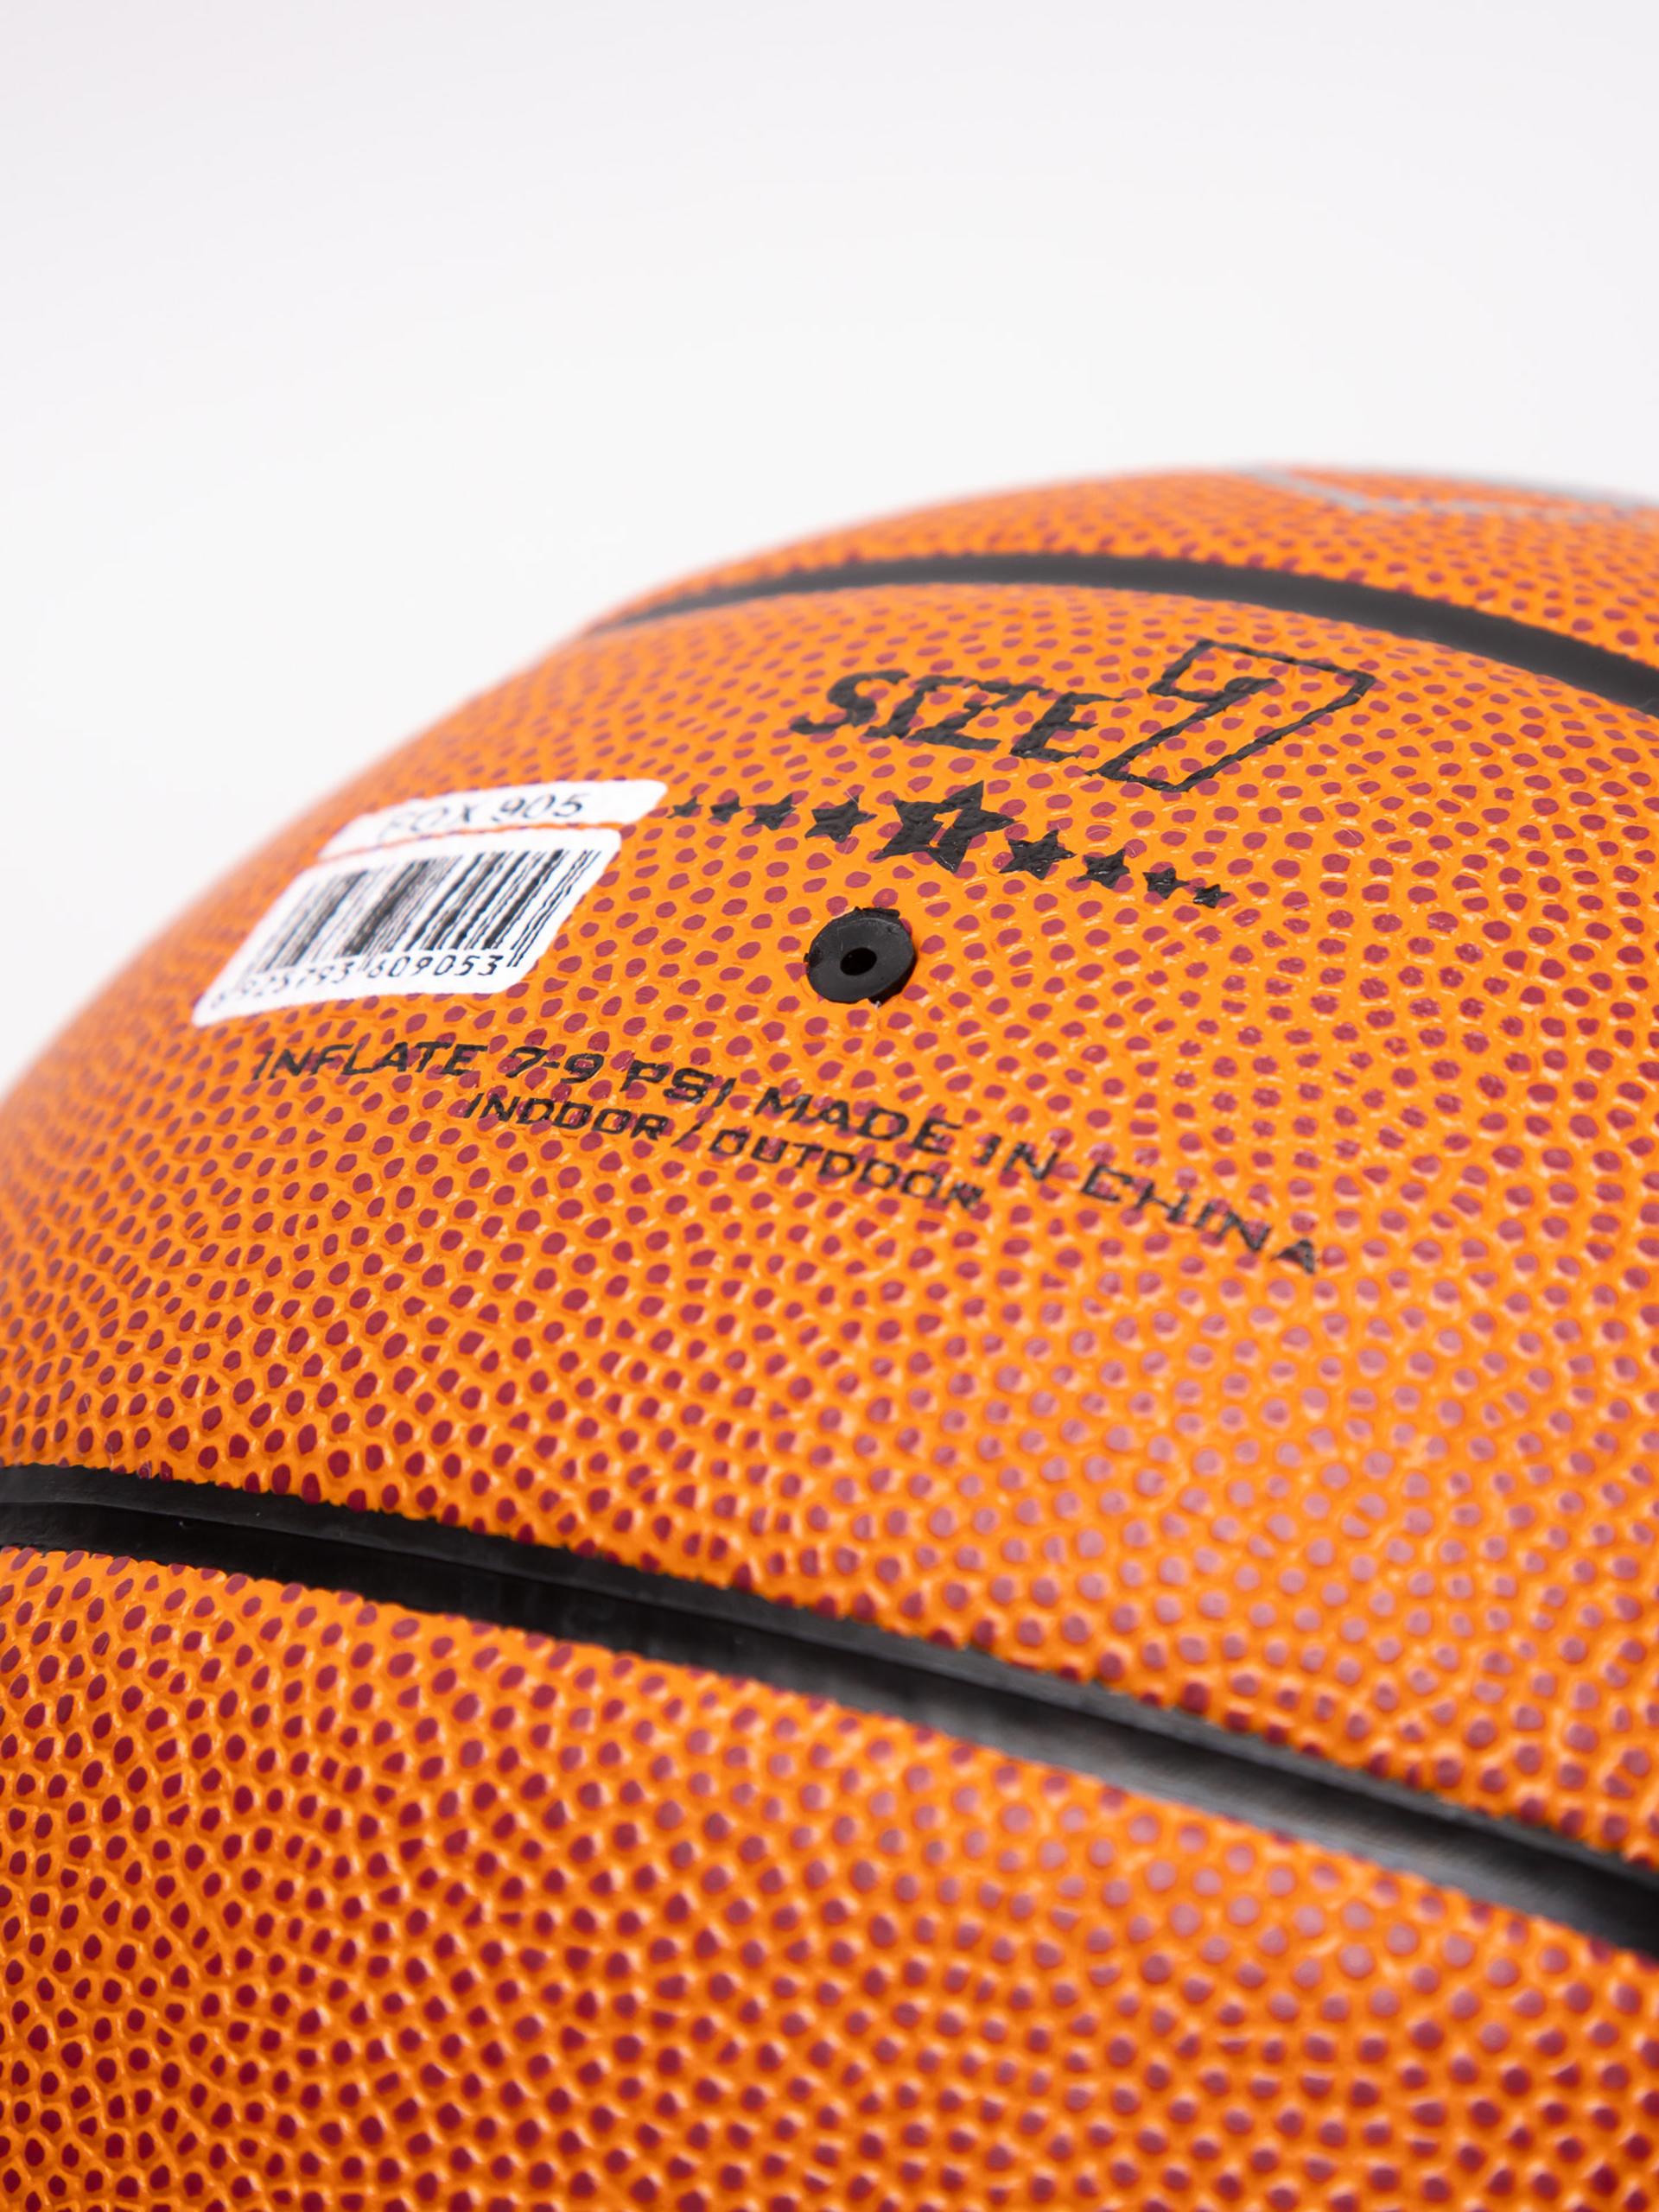 Товар - “Баскетбольный мяч”